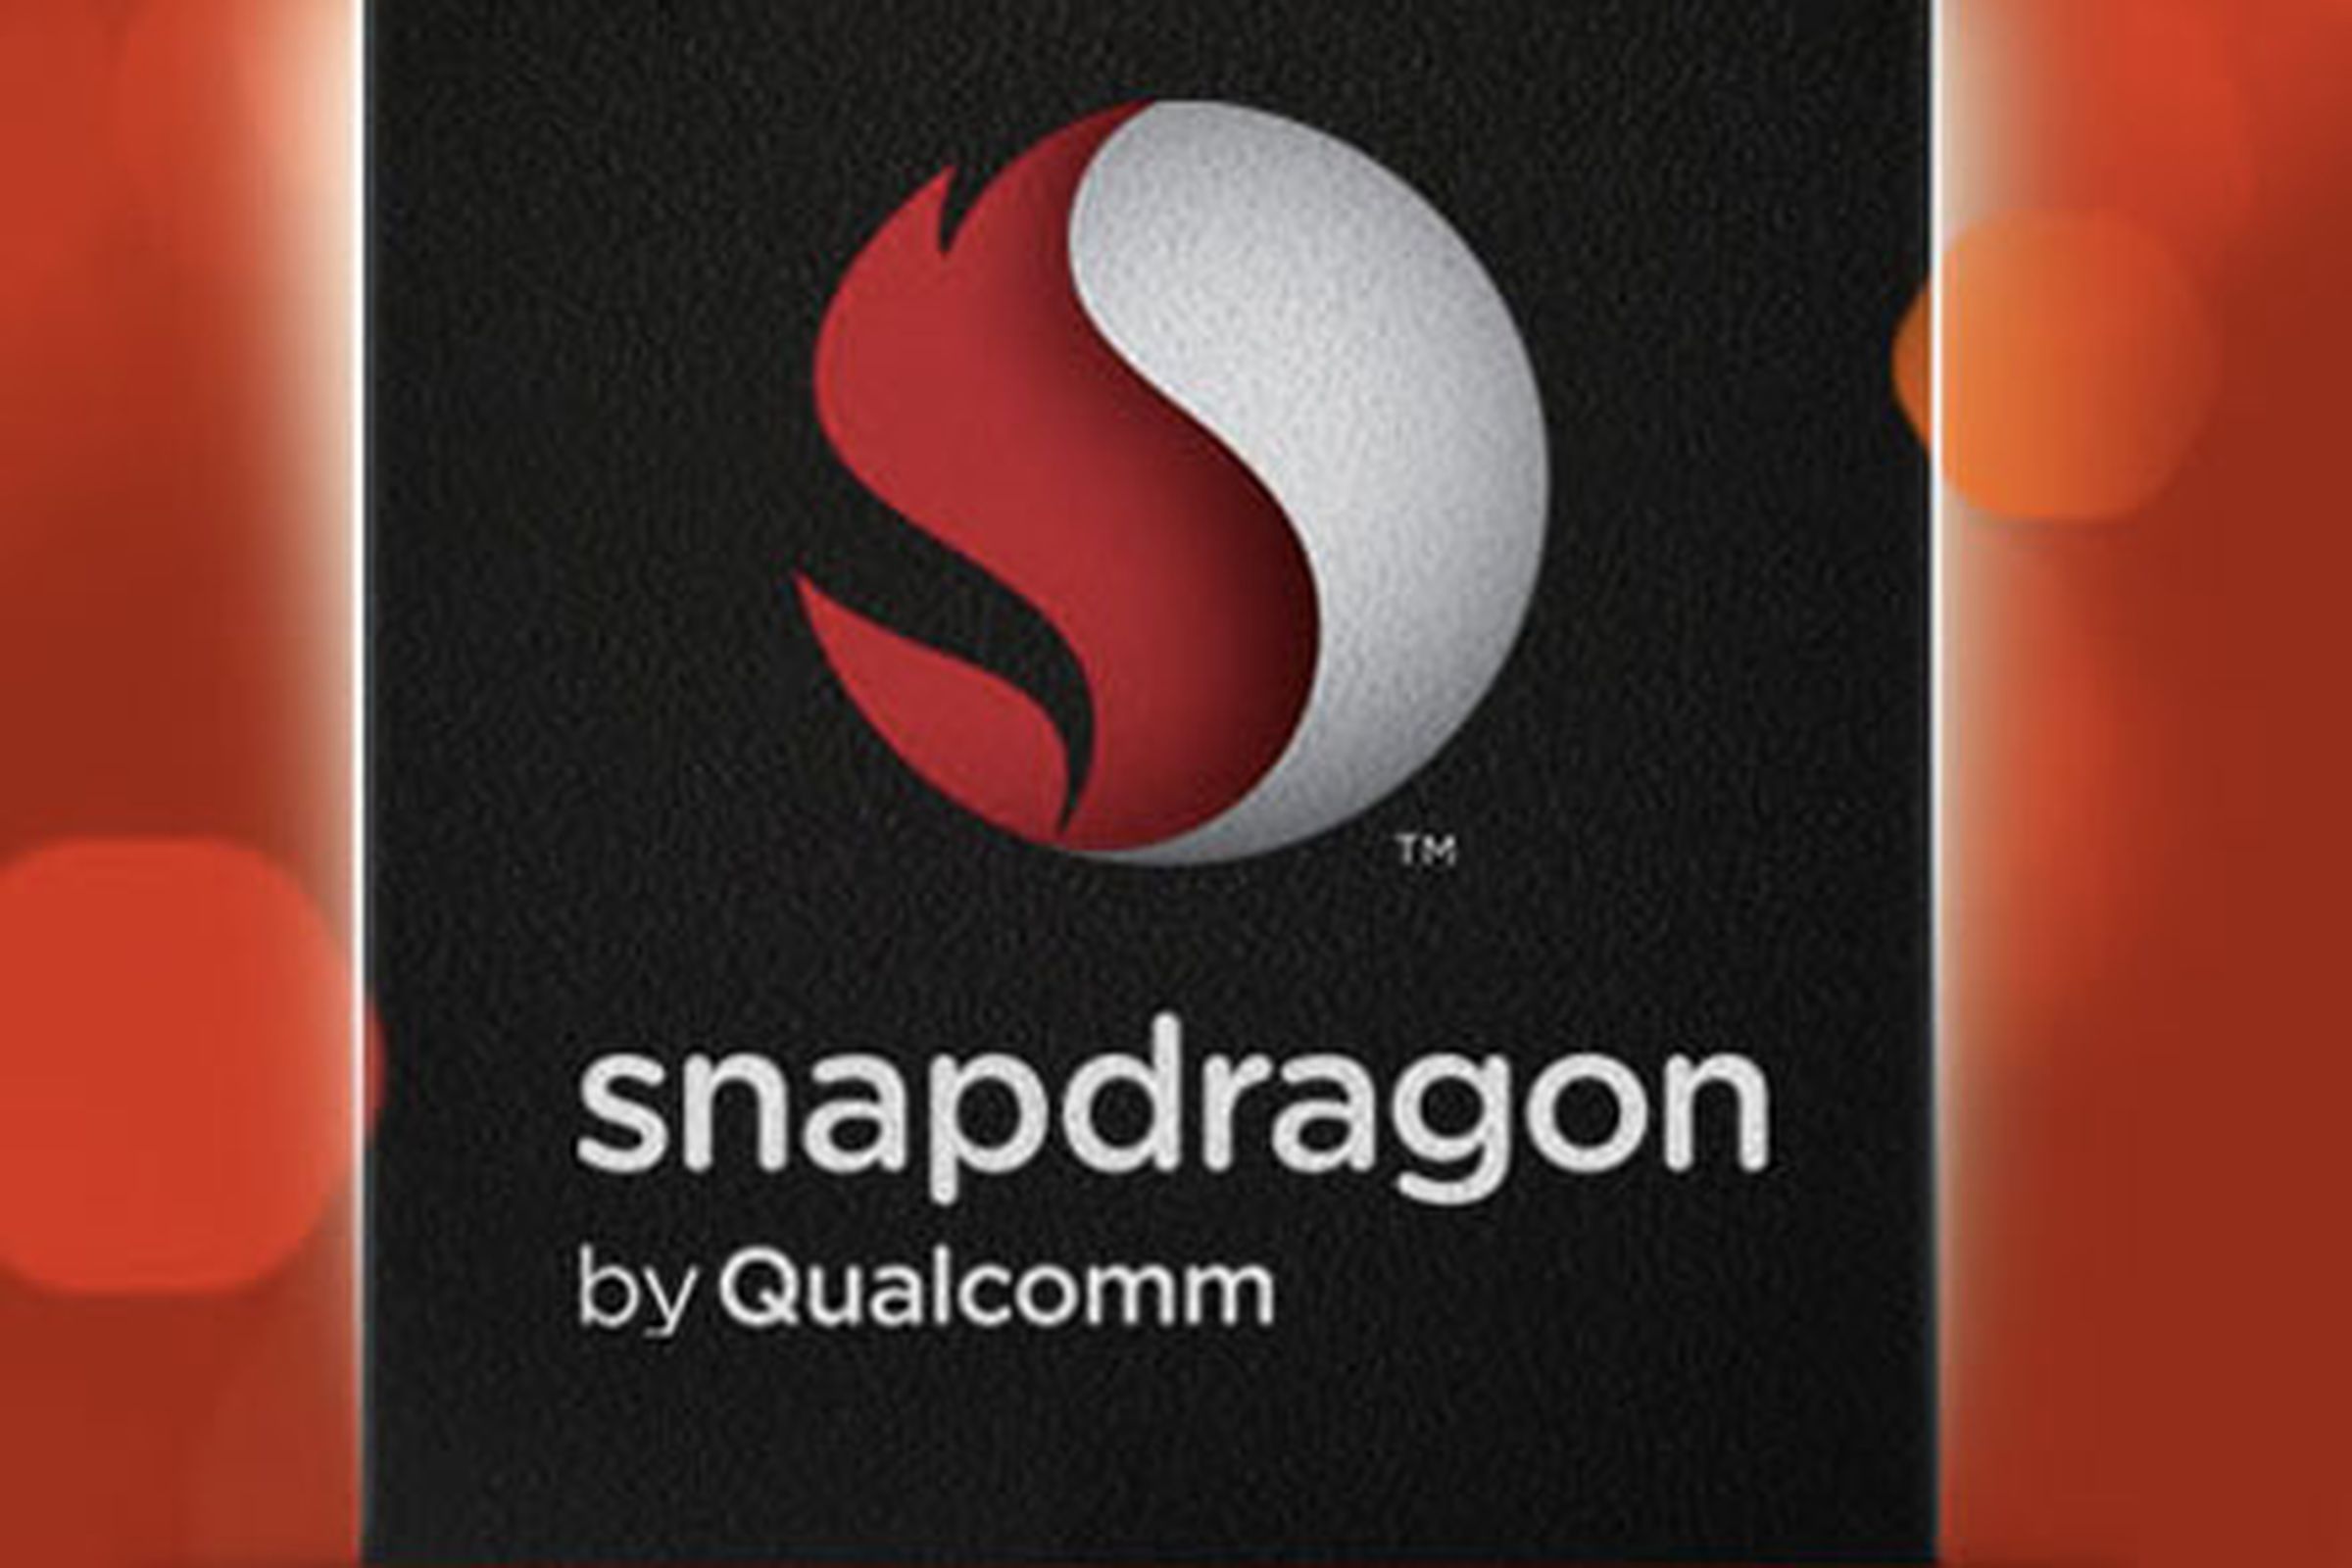 Snapdragon processor 440